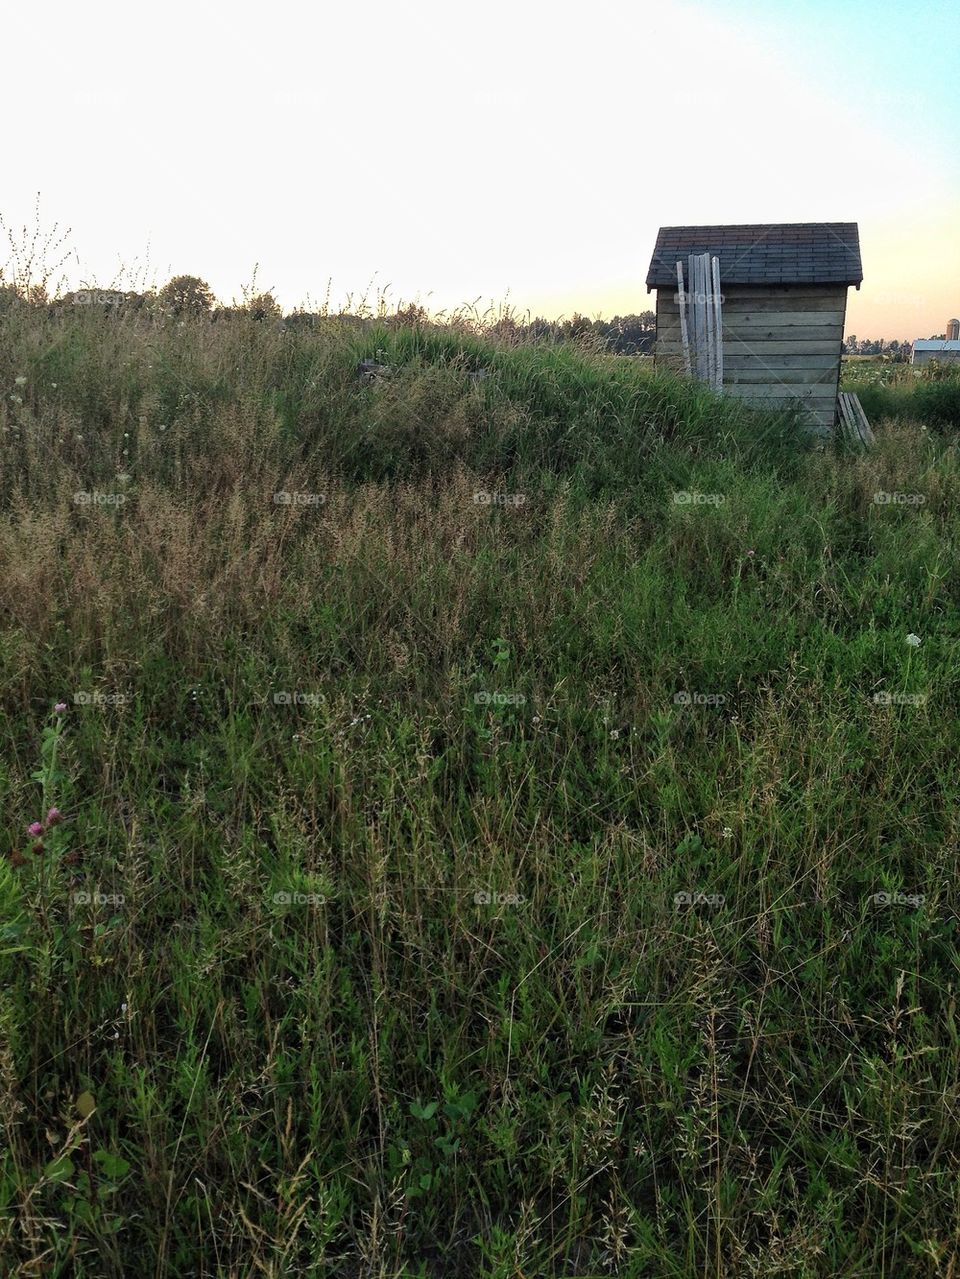 Farmers shed in grass field.